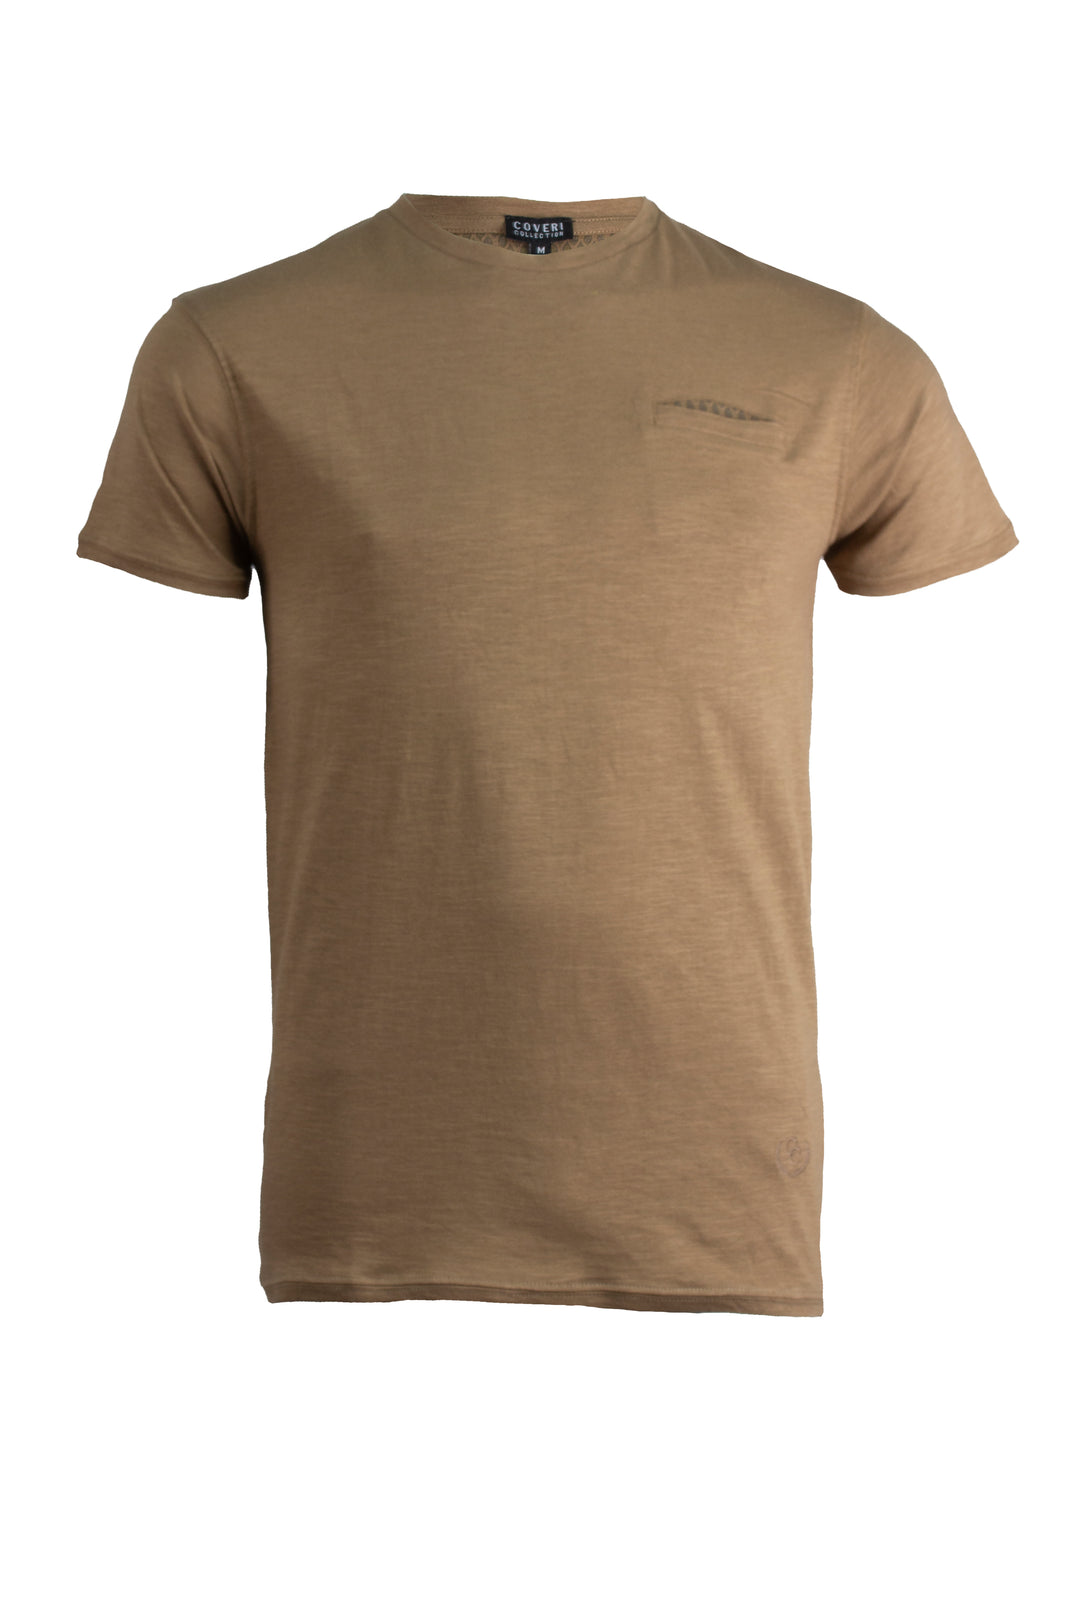 T-shirt uomo girocollo tinta unita con taschino a filo